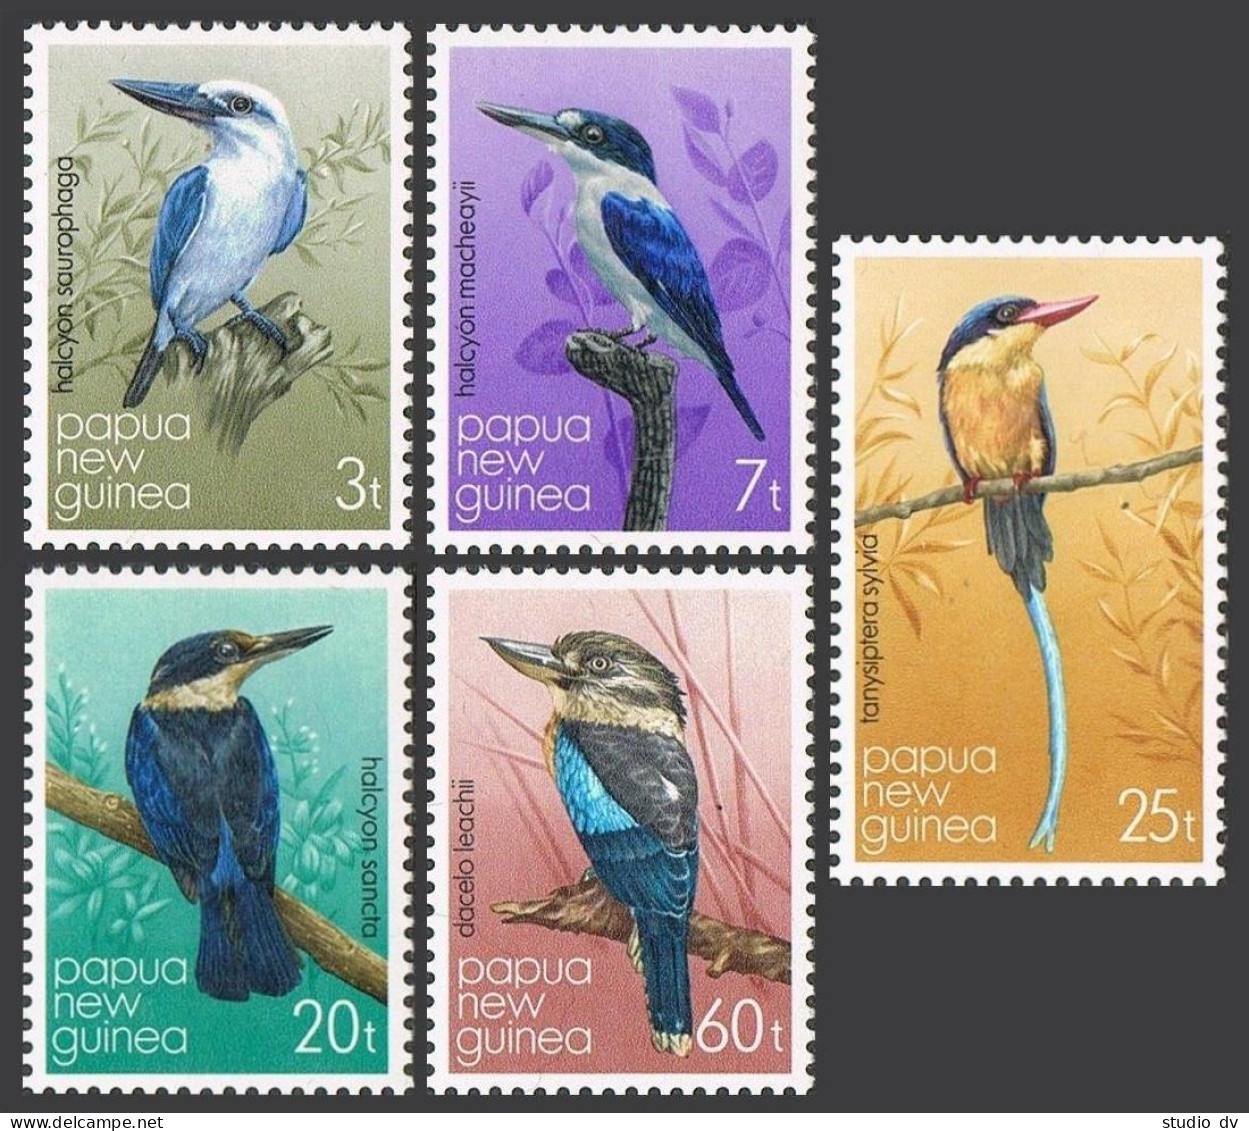 Papua New Guinea 529-533, MNH. Mi 402-406. Birds 1981. Kingfishers, Kookaburra. - Guinea (1958-...)